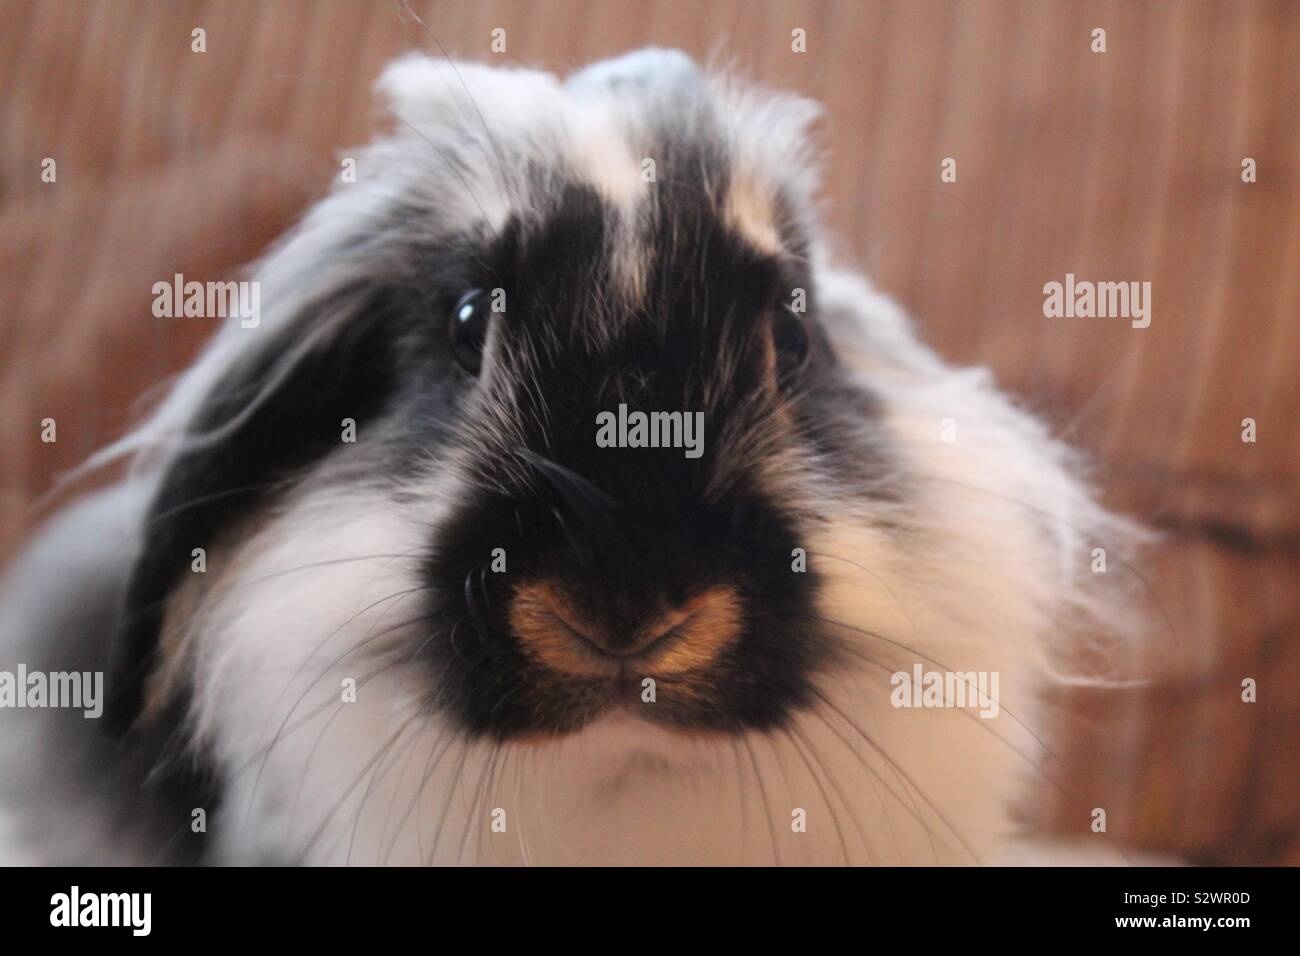 Baby rabbit Stock Photo